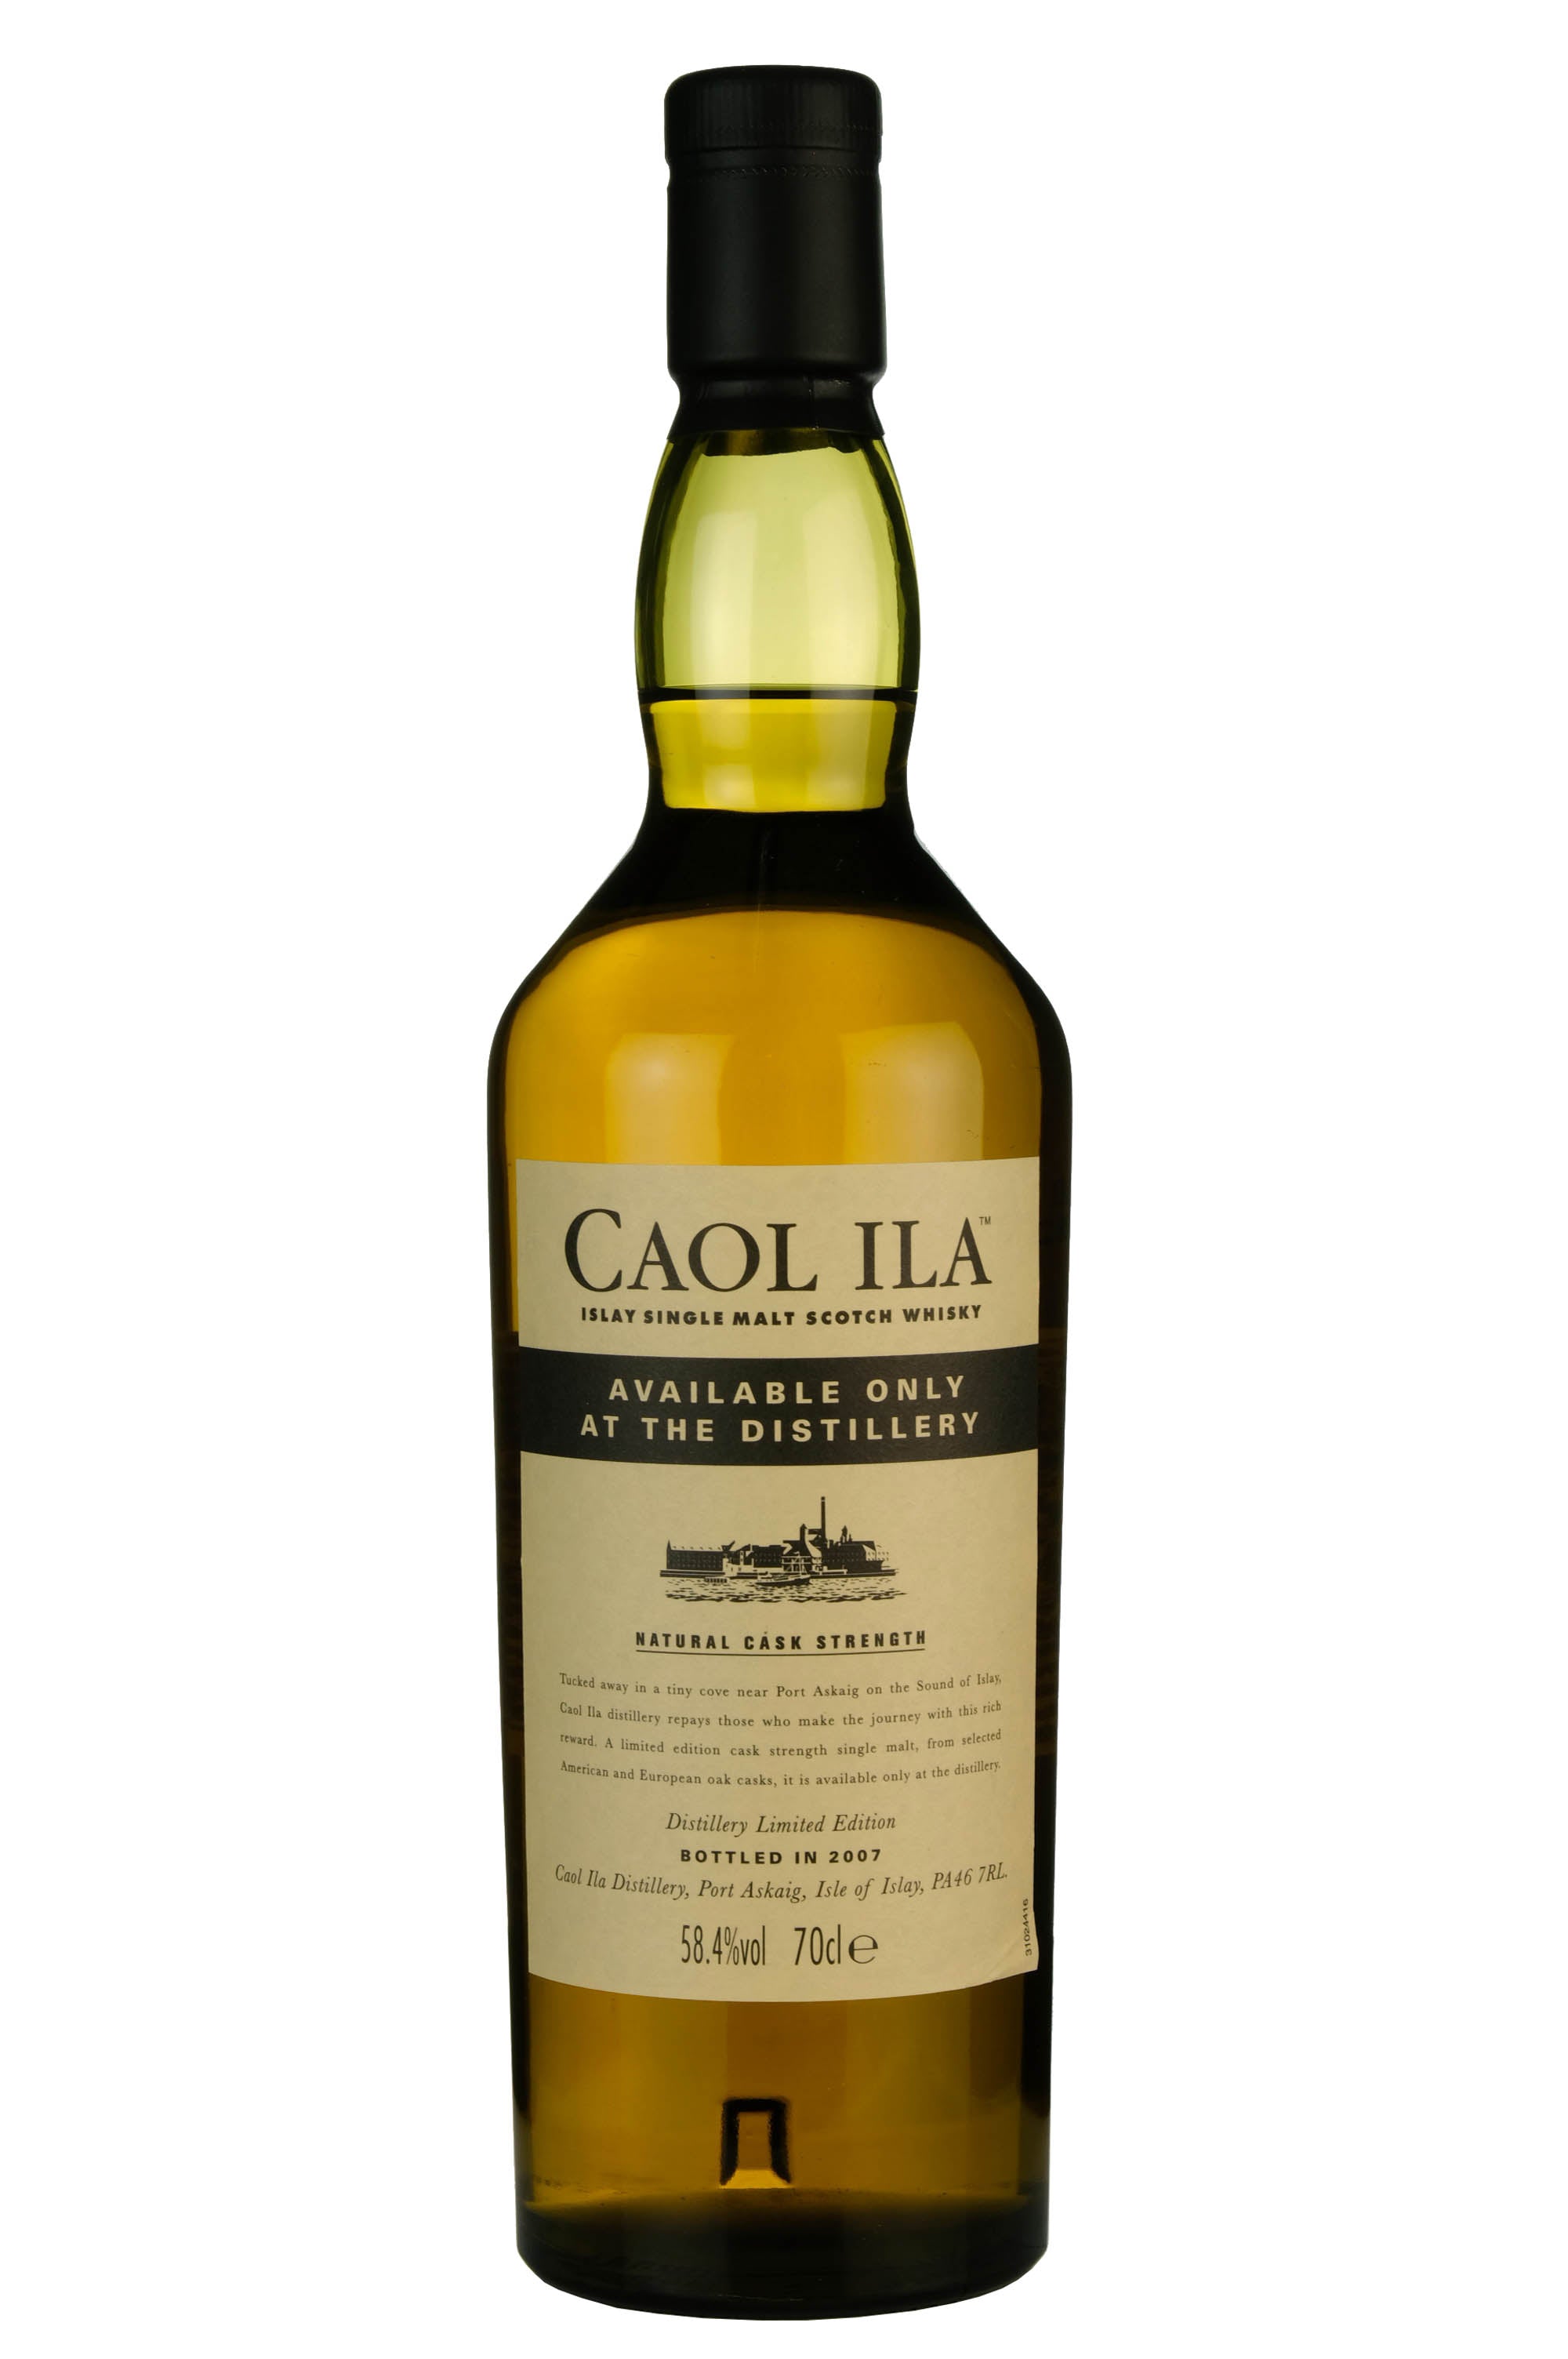 Caol Ila Cask Strength Distillery Only 2007